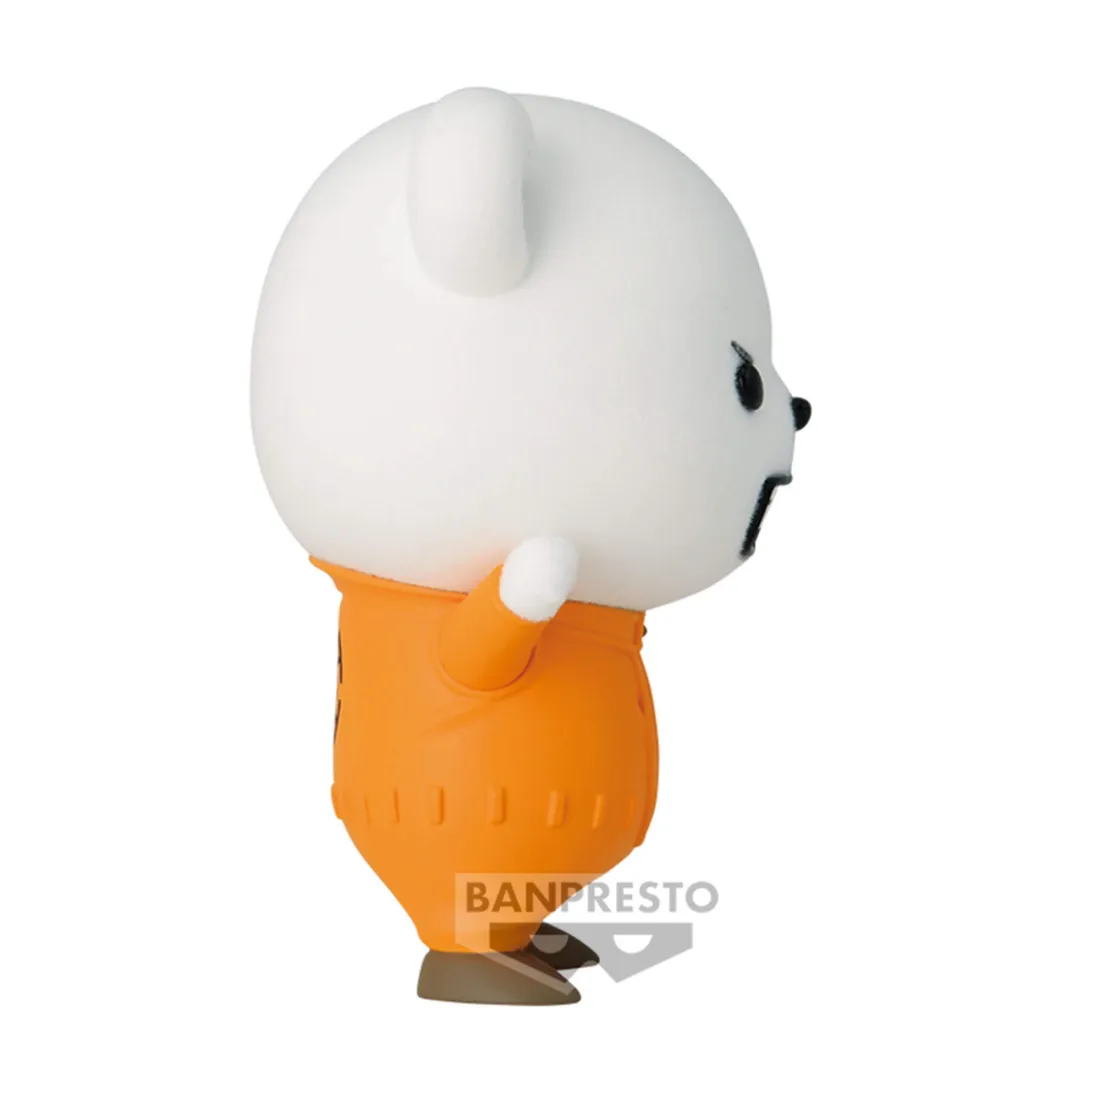 One Piece - Figurine Kaloo - Fluffy Puffy